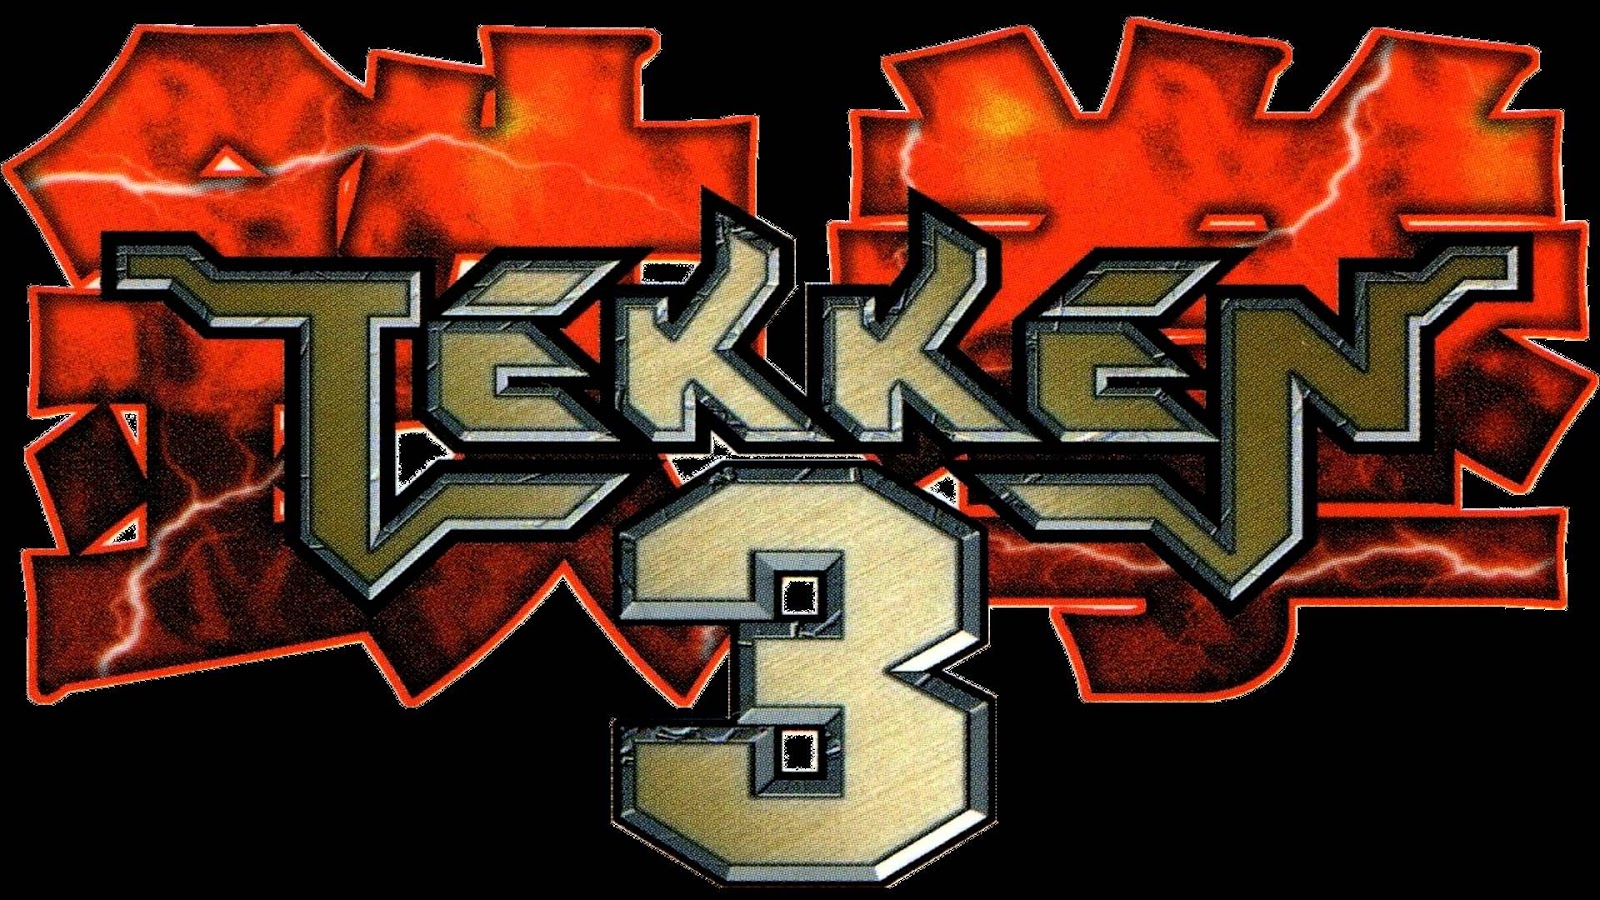 tekken 3 mobile games free download